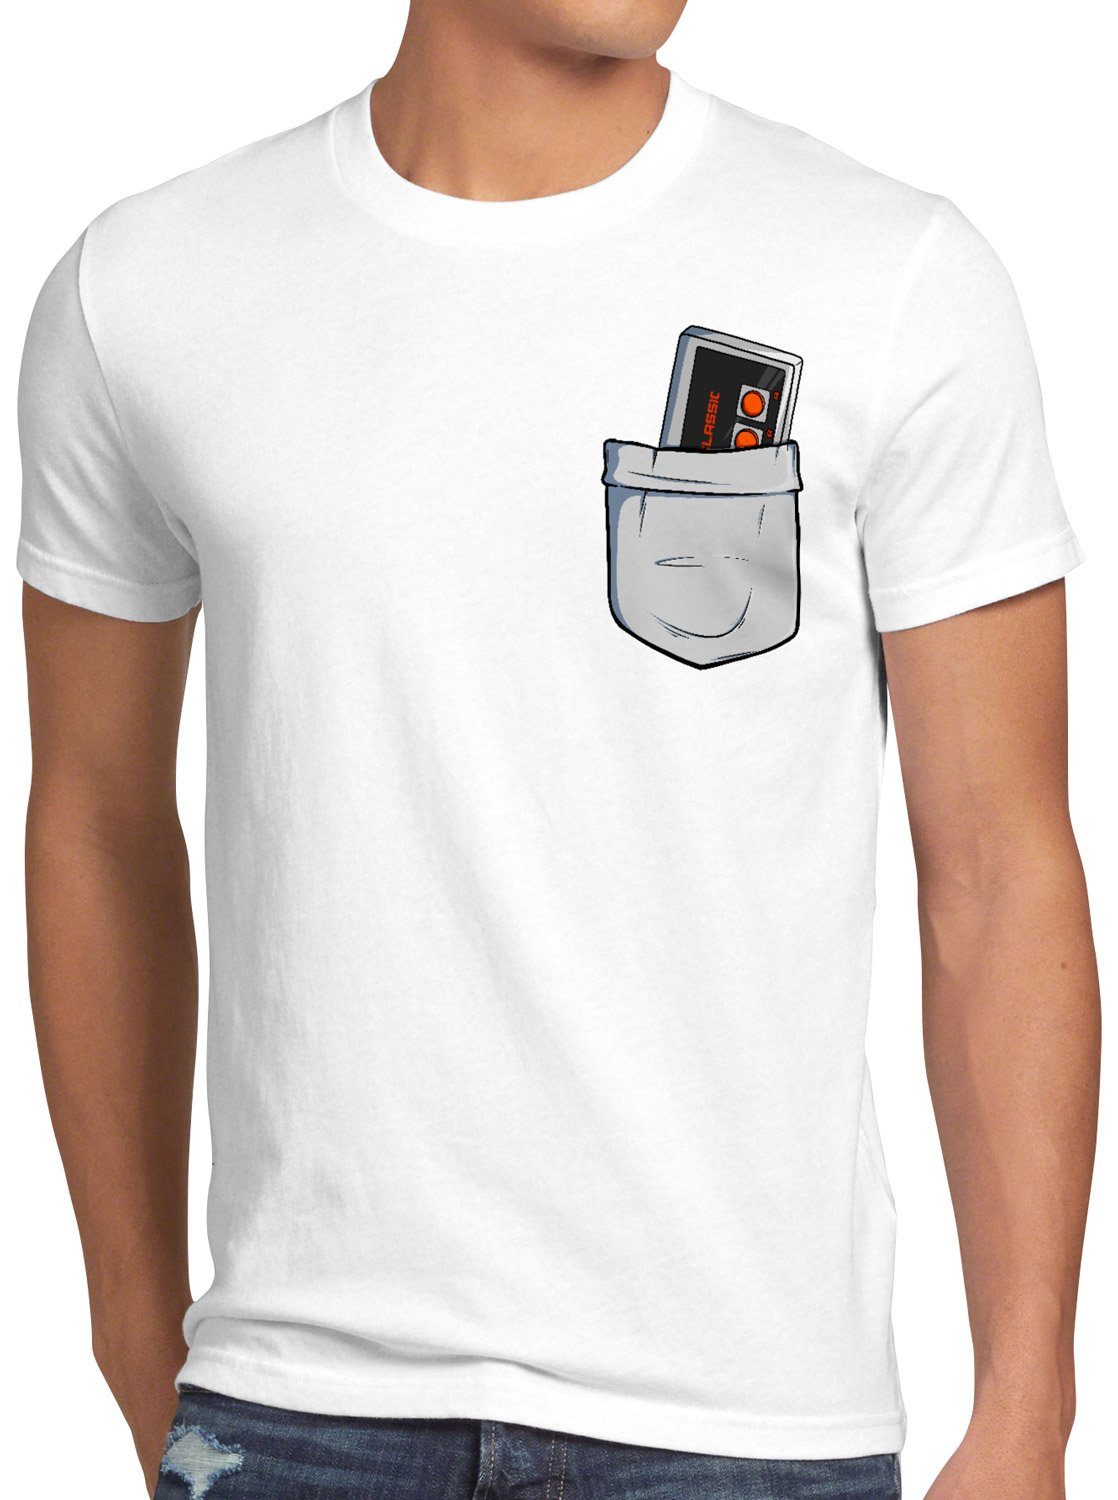 style3 Print-Shirt Herren T-Shirt NES Brusttasche classic 8-Bit konsole